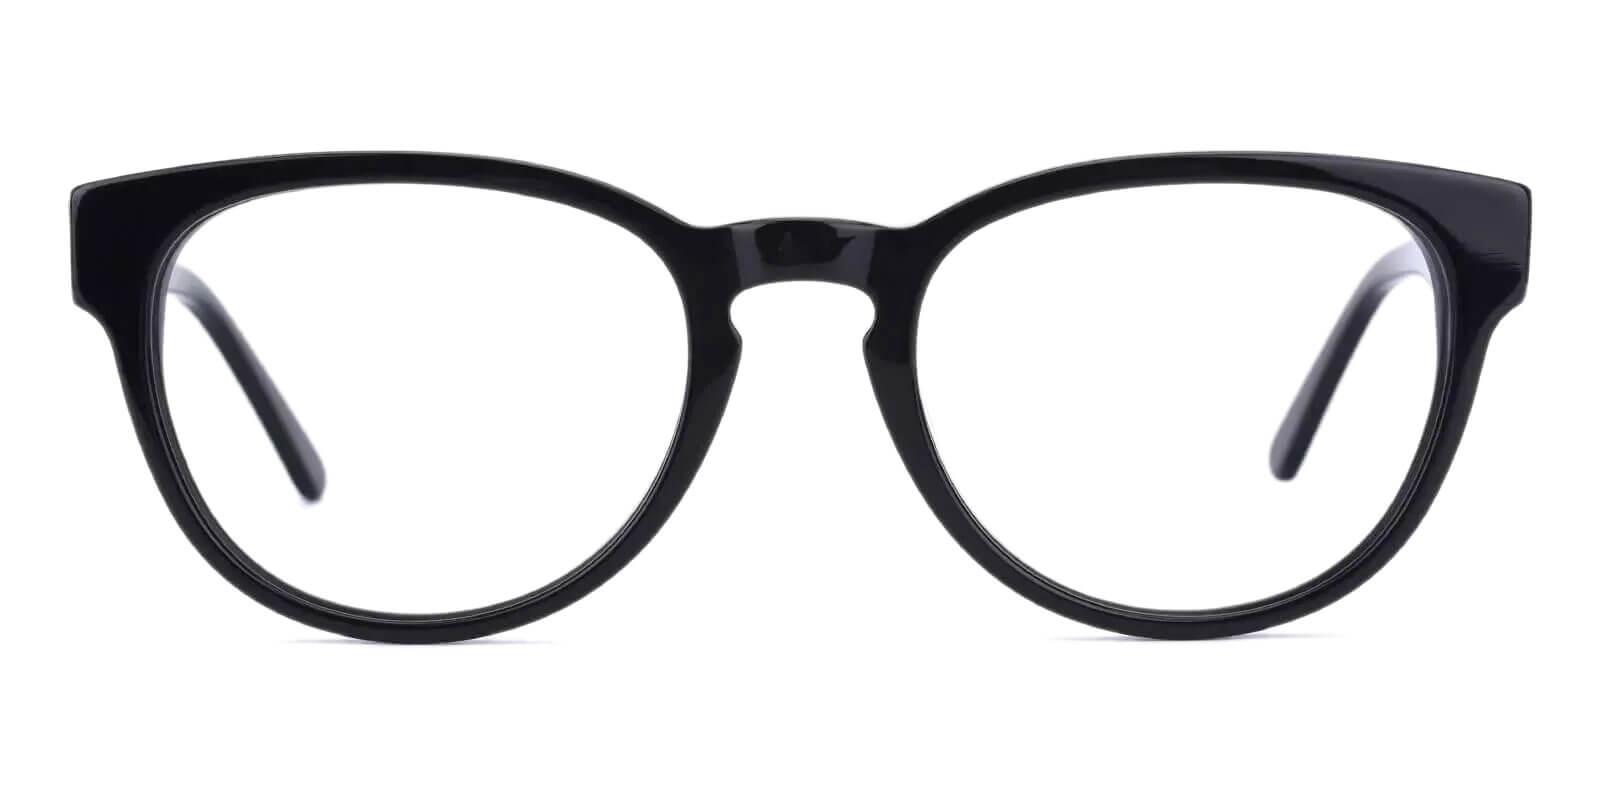 Aurora Black Acetate Eyeglasses , Fashion , SpringHinges , UniversalBridgeFit Frames from ABBE Glasses